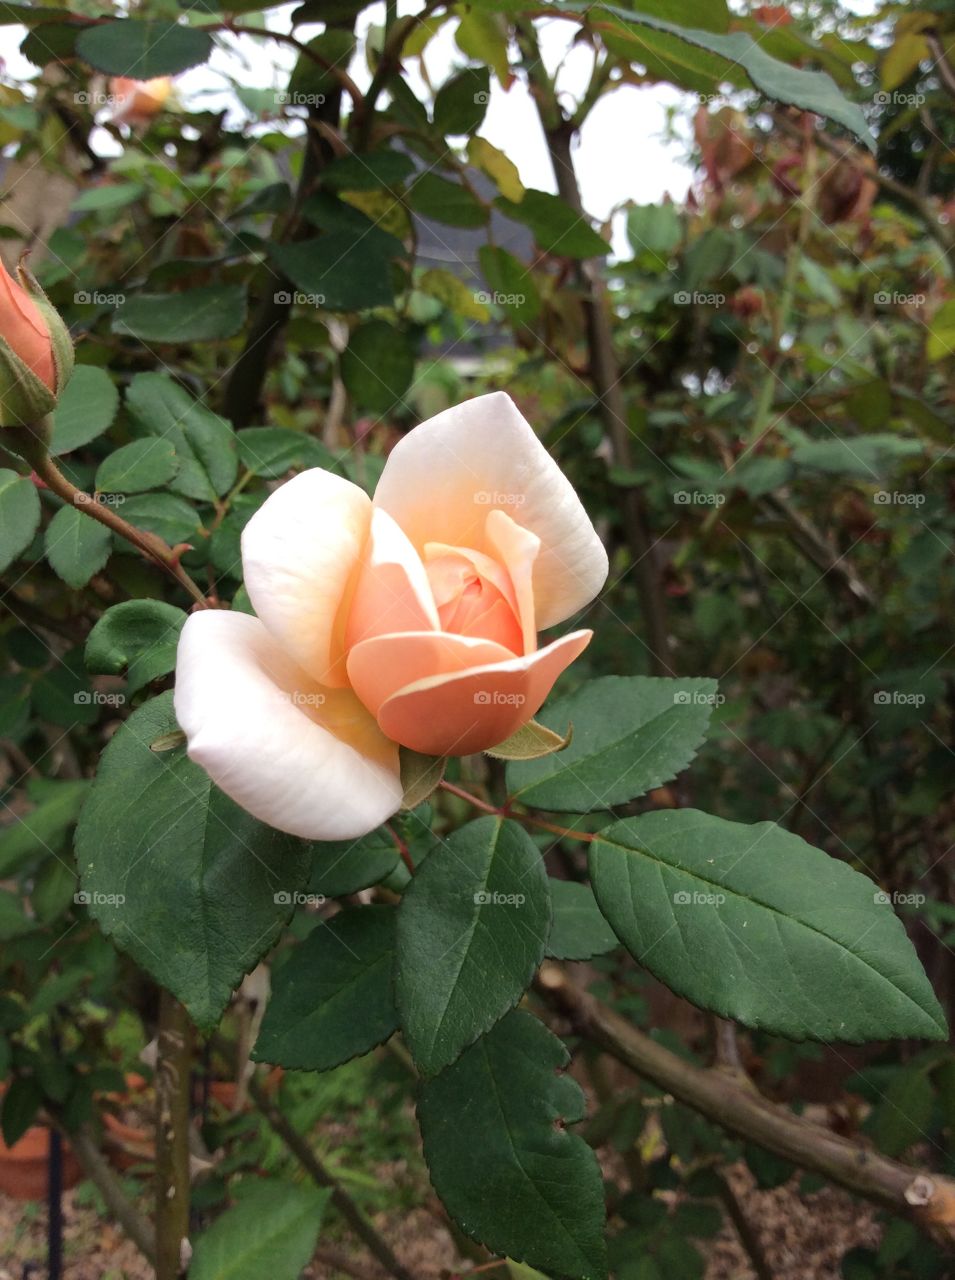 Antique Rose Bud. We have several antique roses in our back yard